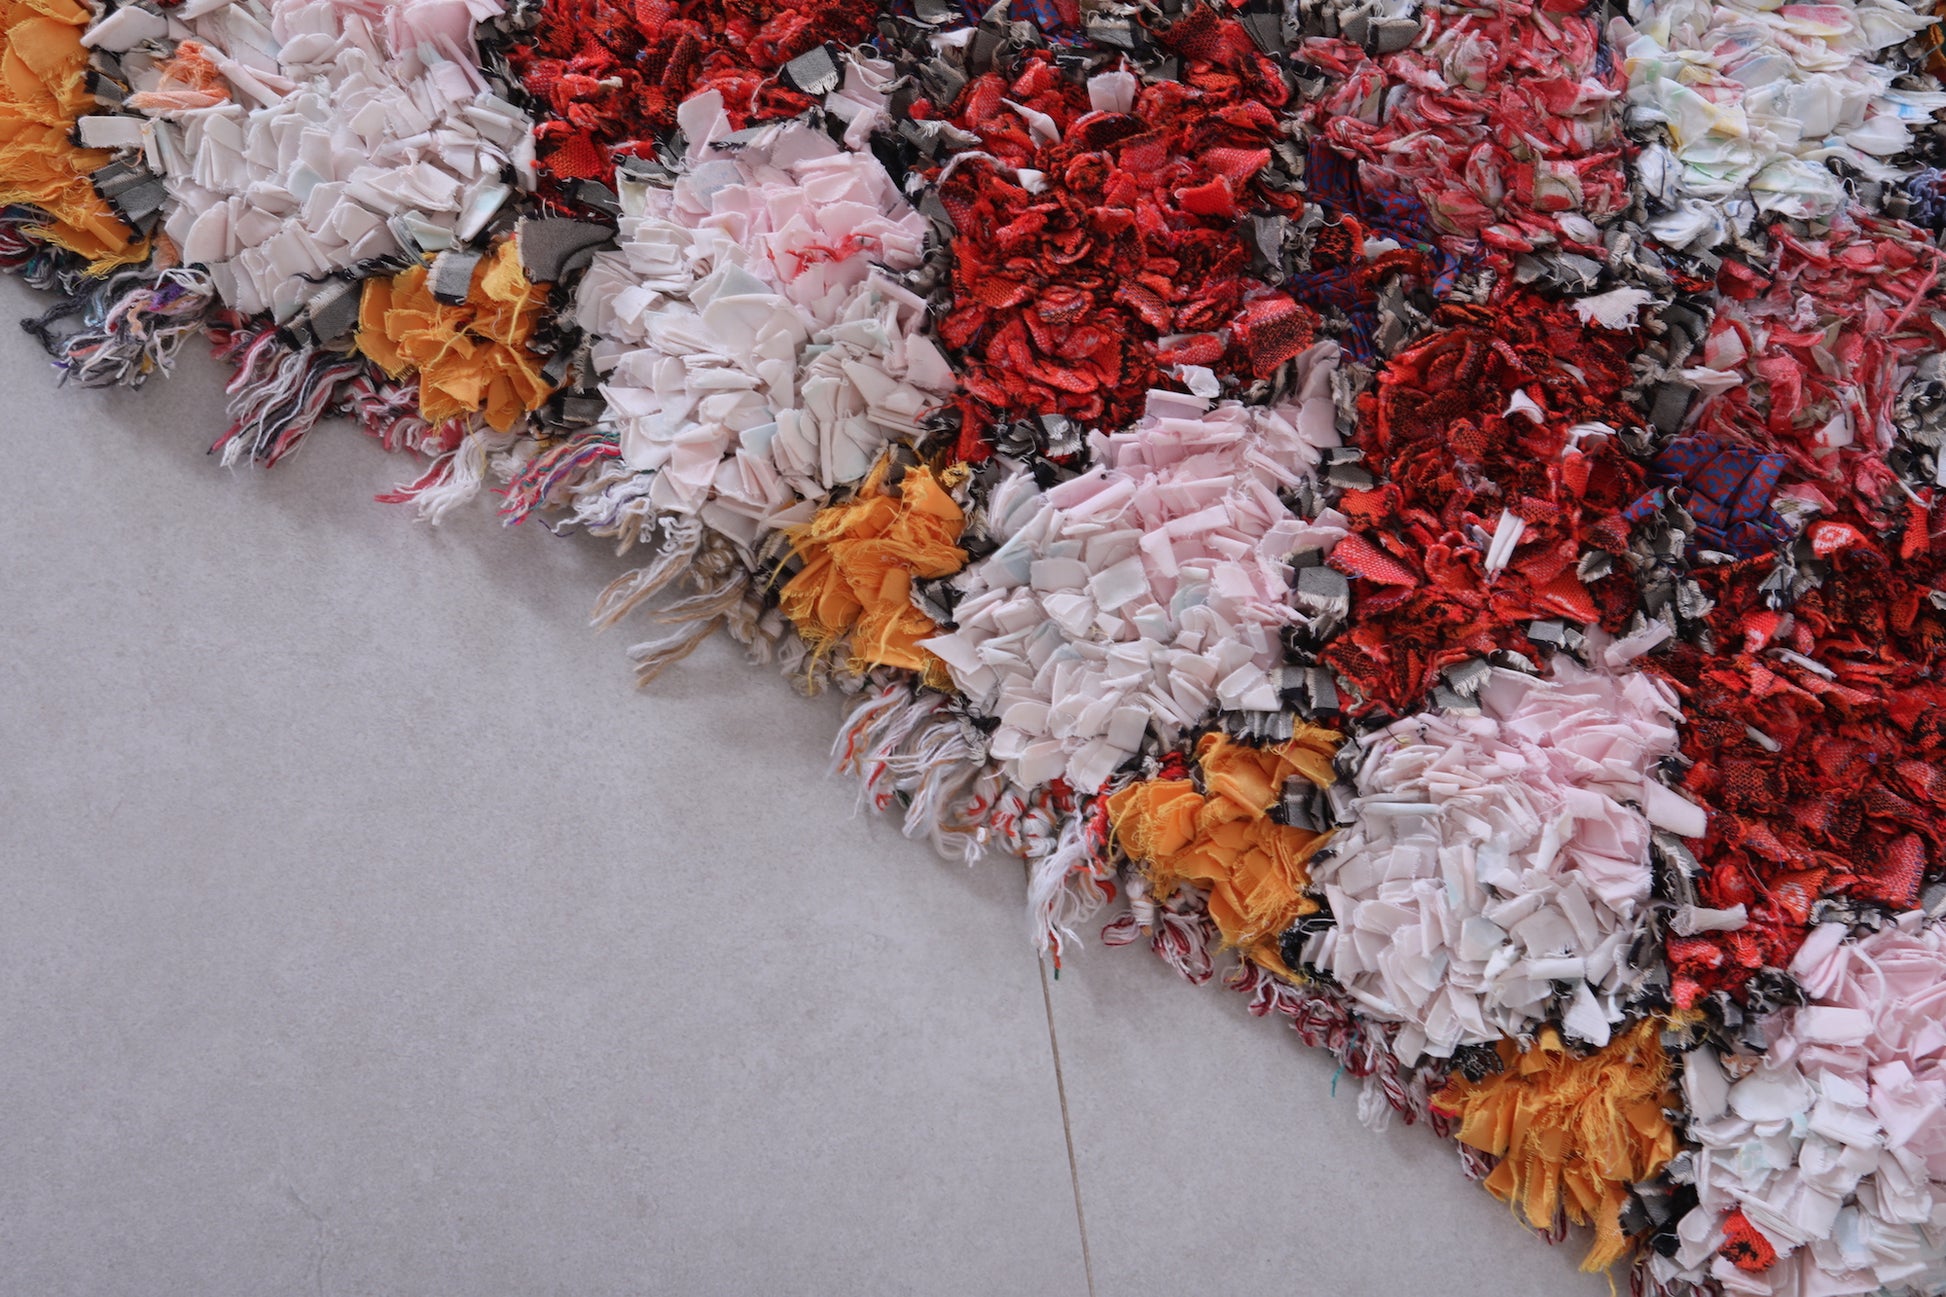 Colorful shaggy Boucherouite rug 2.4 X 6.5 Feet